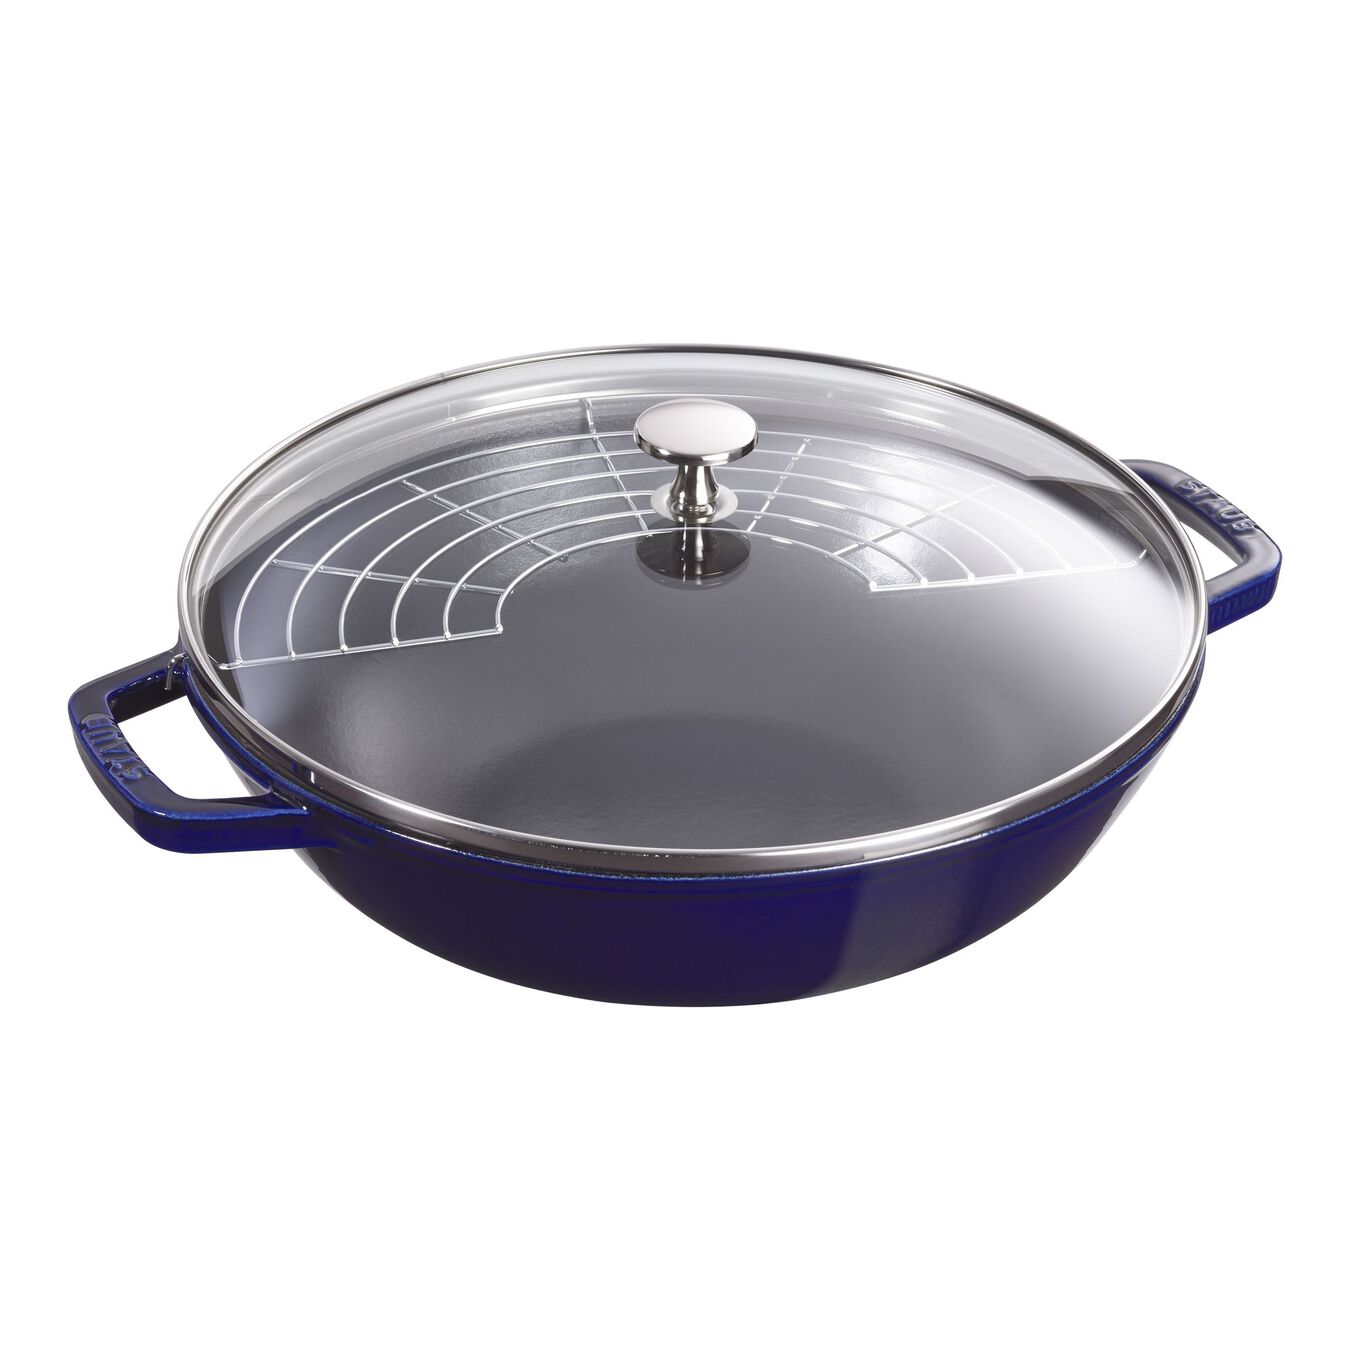 30 cm Cast iron Wok with glass lid dark-blue,,large 1